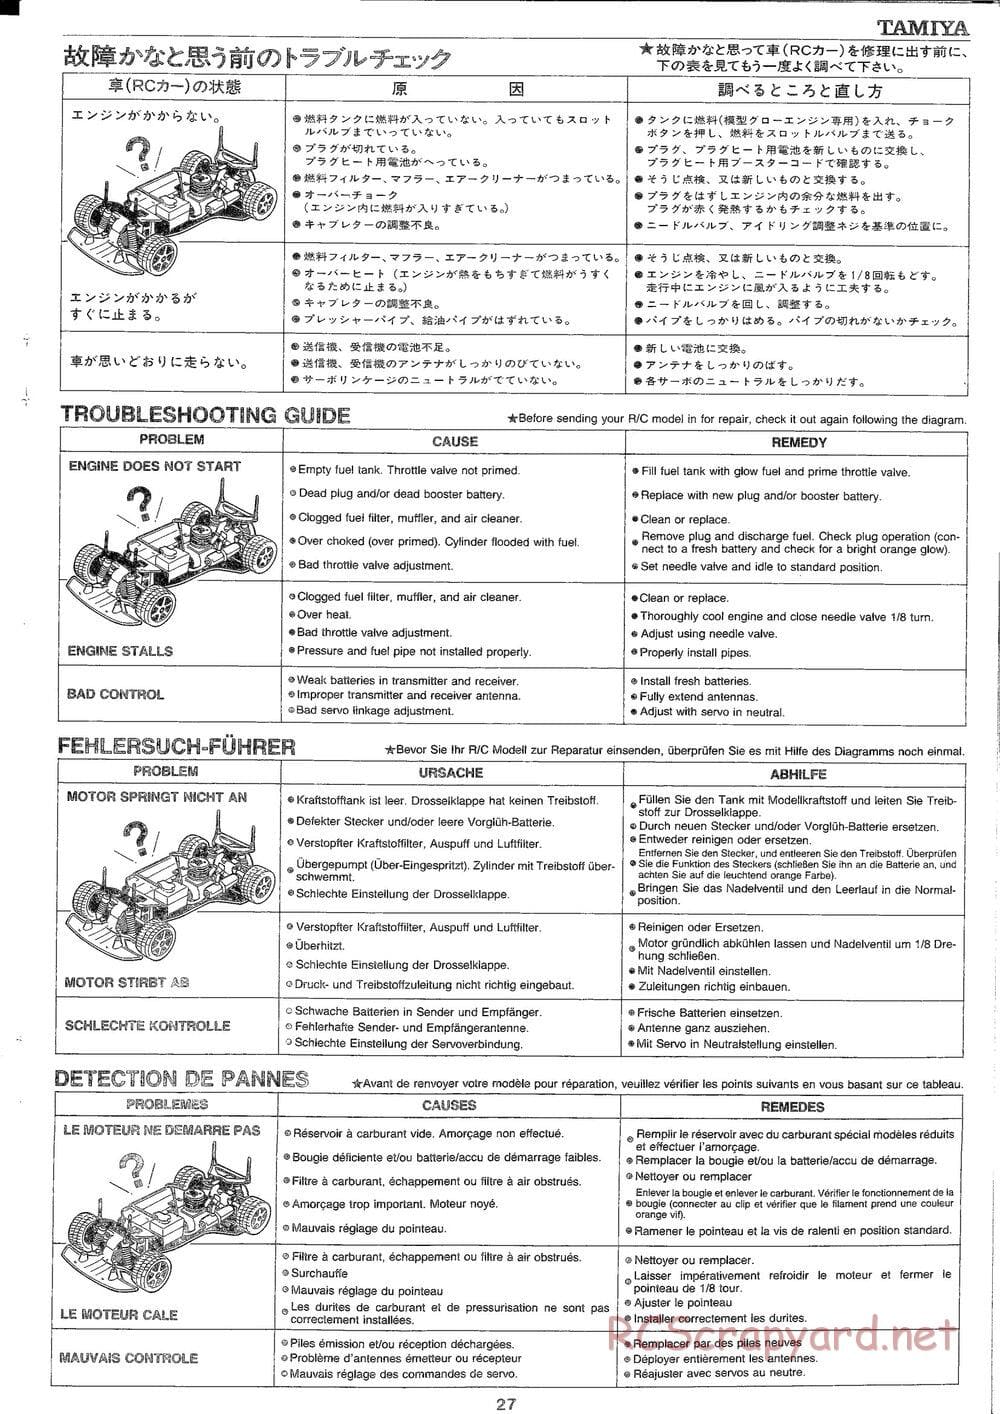 Tamiya - TGX Mk.1 TRF Special Chassis - Manual - Page 27